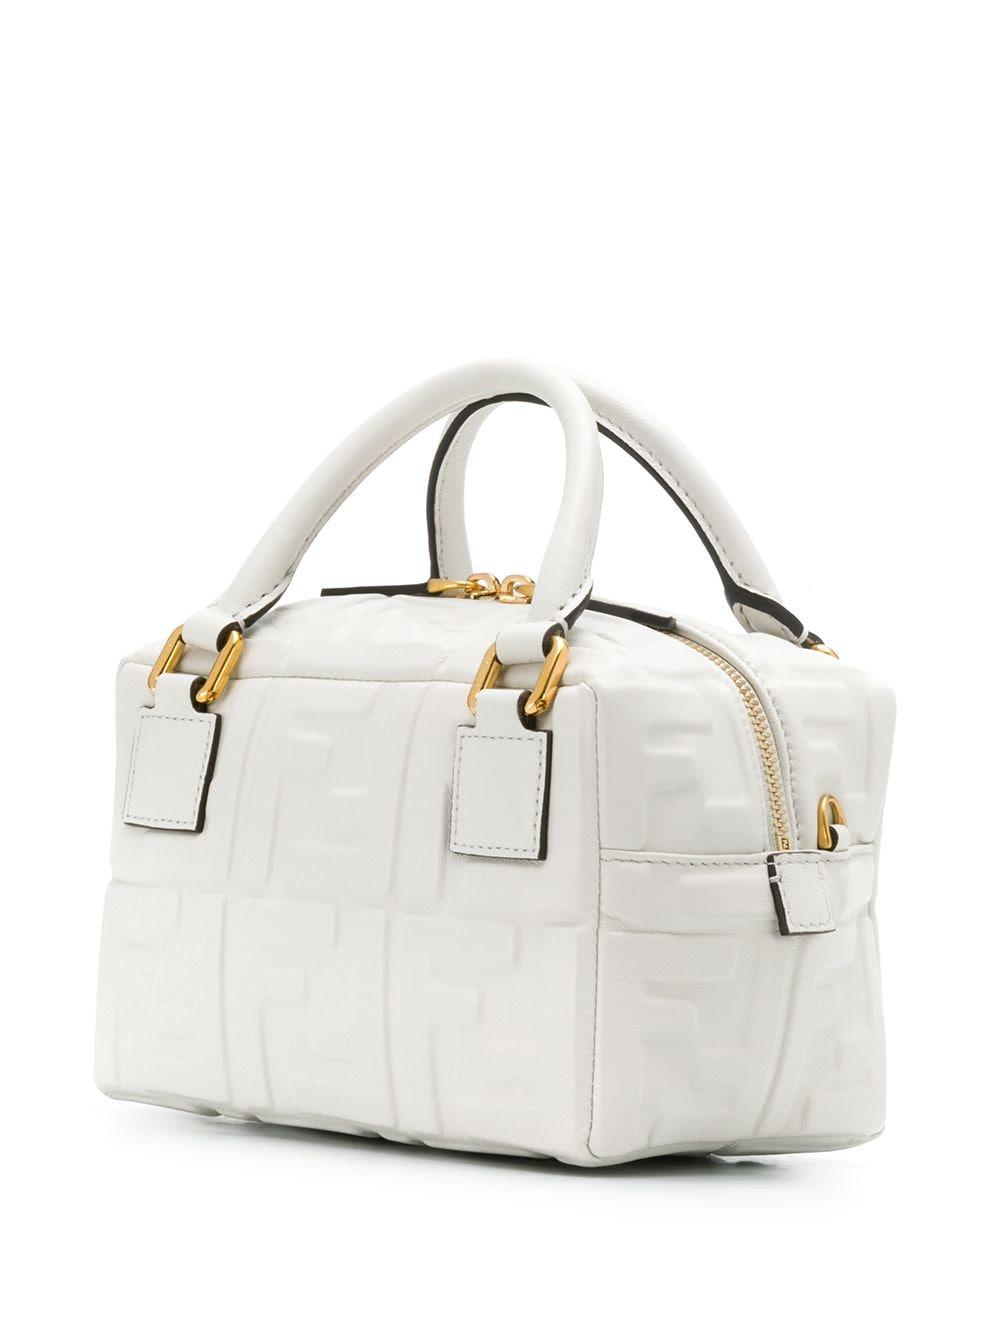 Fendi Leather Mini Boston Bag in White | Lyst